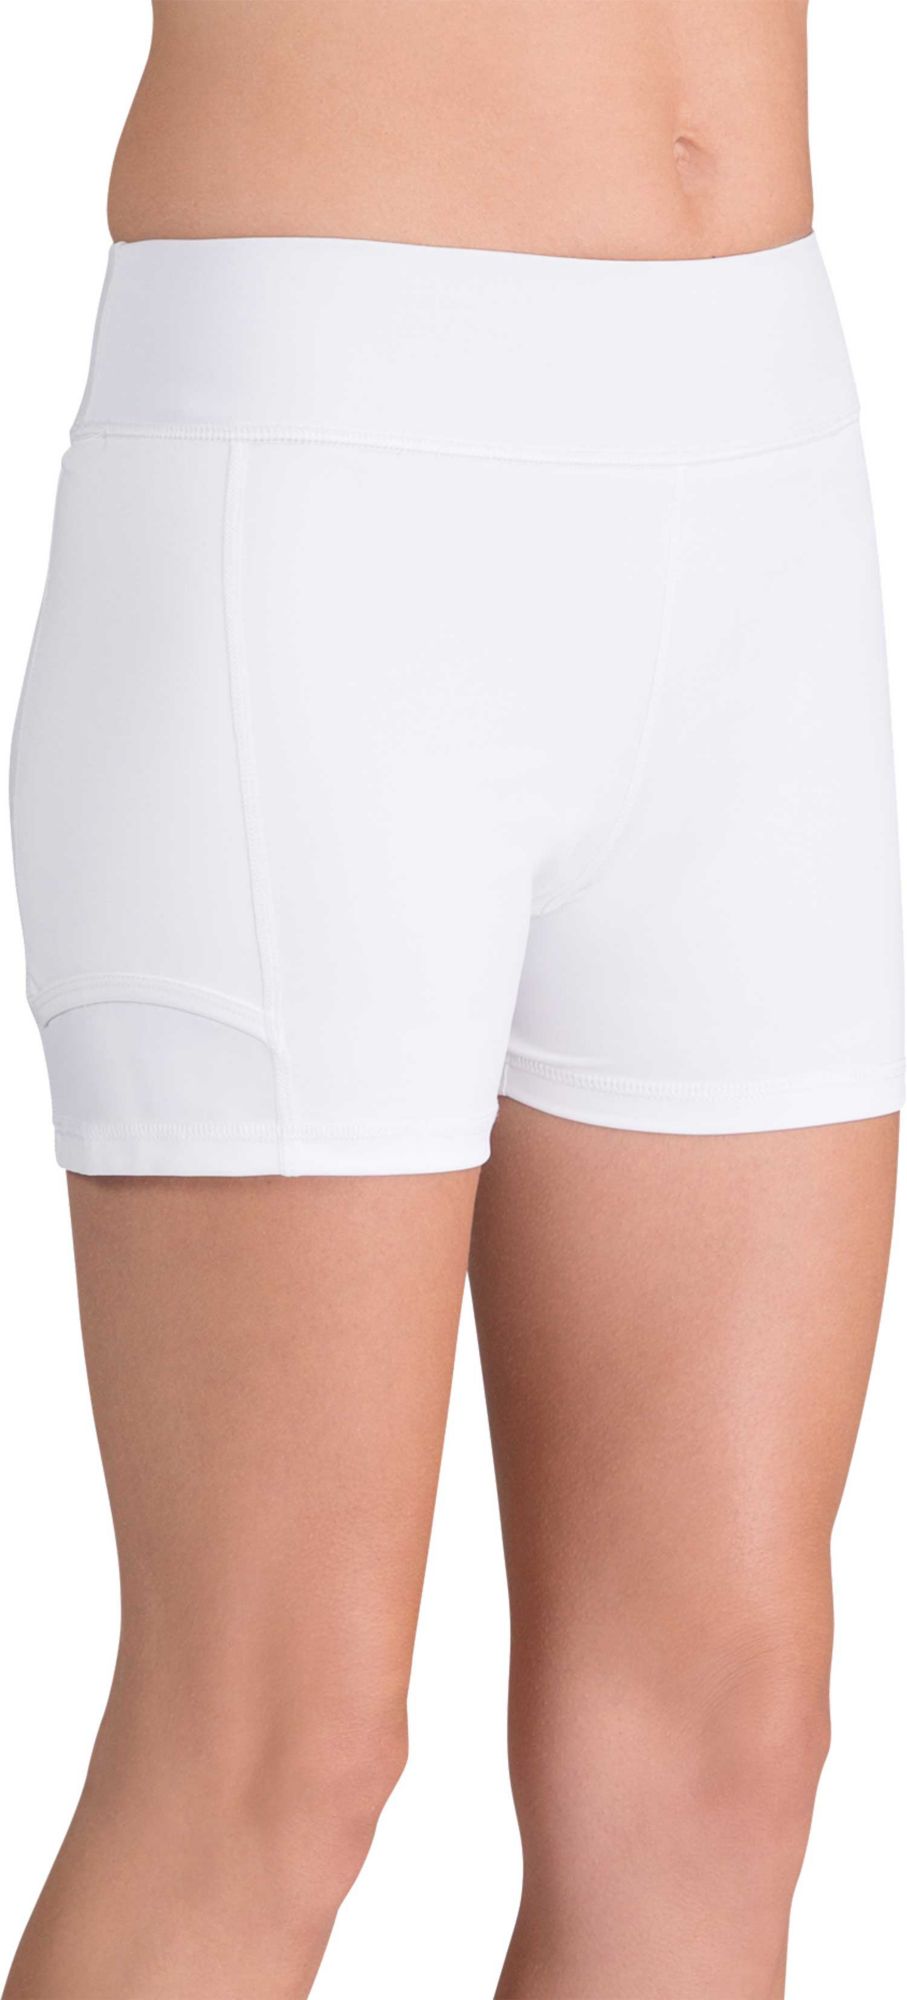 cheap compression shorts women's